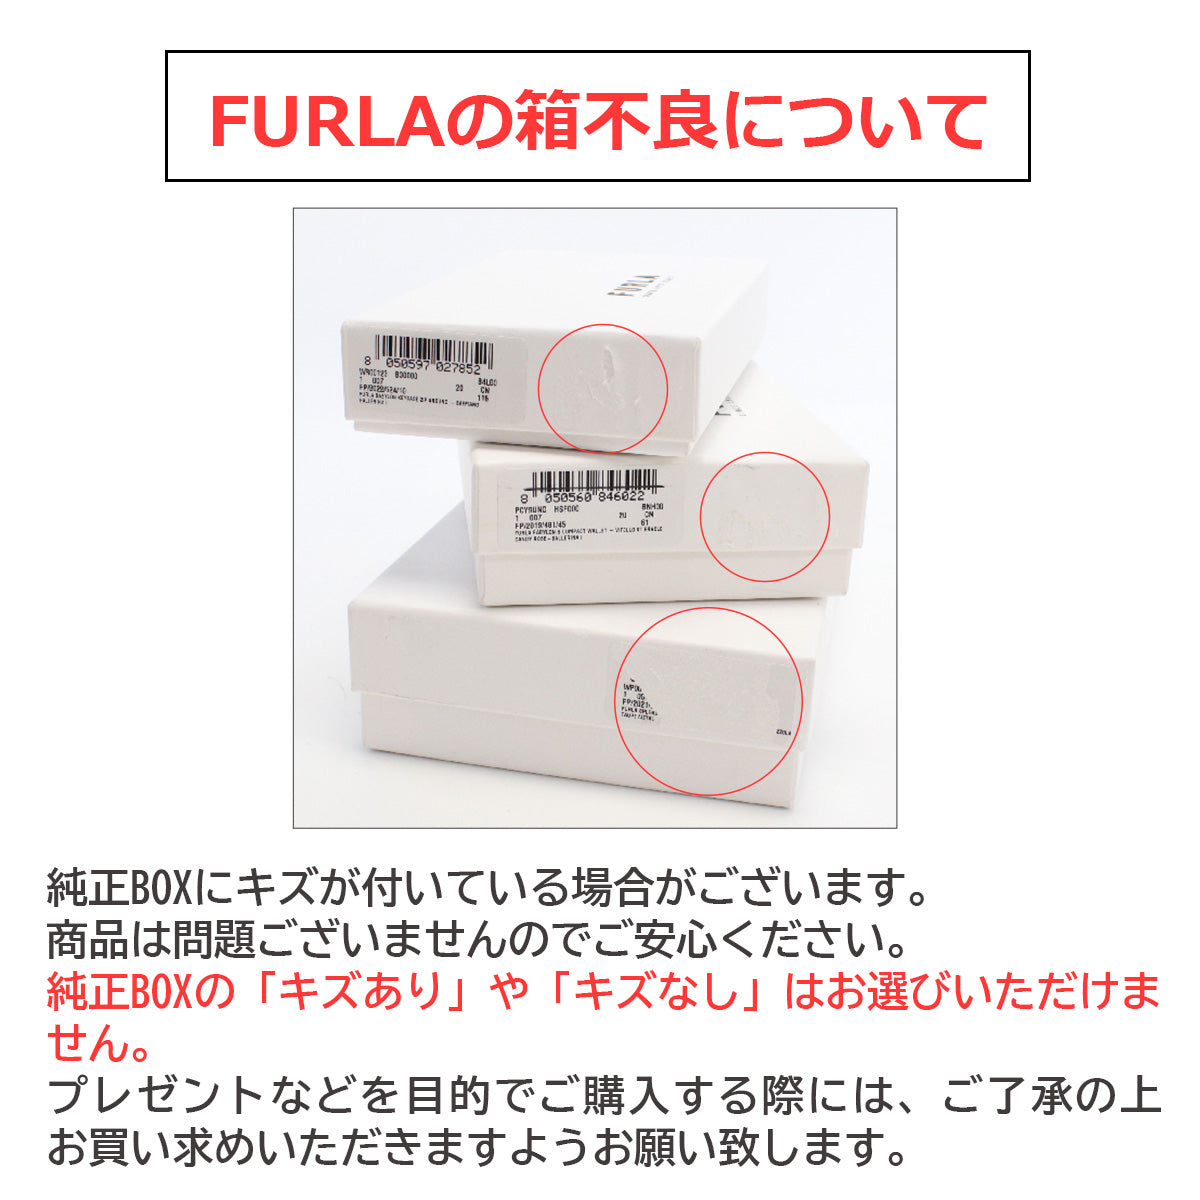 Furla フルラ FURLA MAGNOLIA WR00344 4連キーケース NERO ブラック レディース